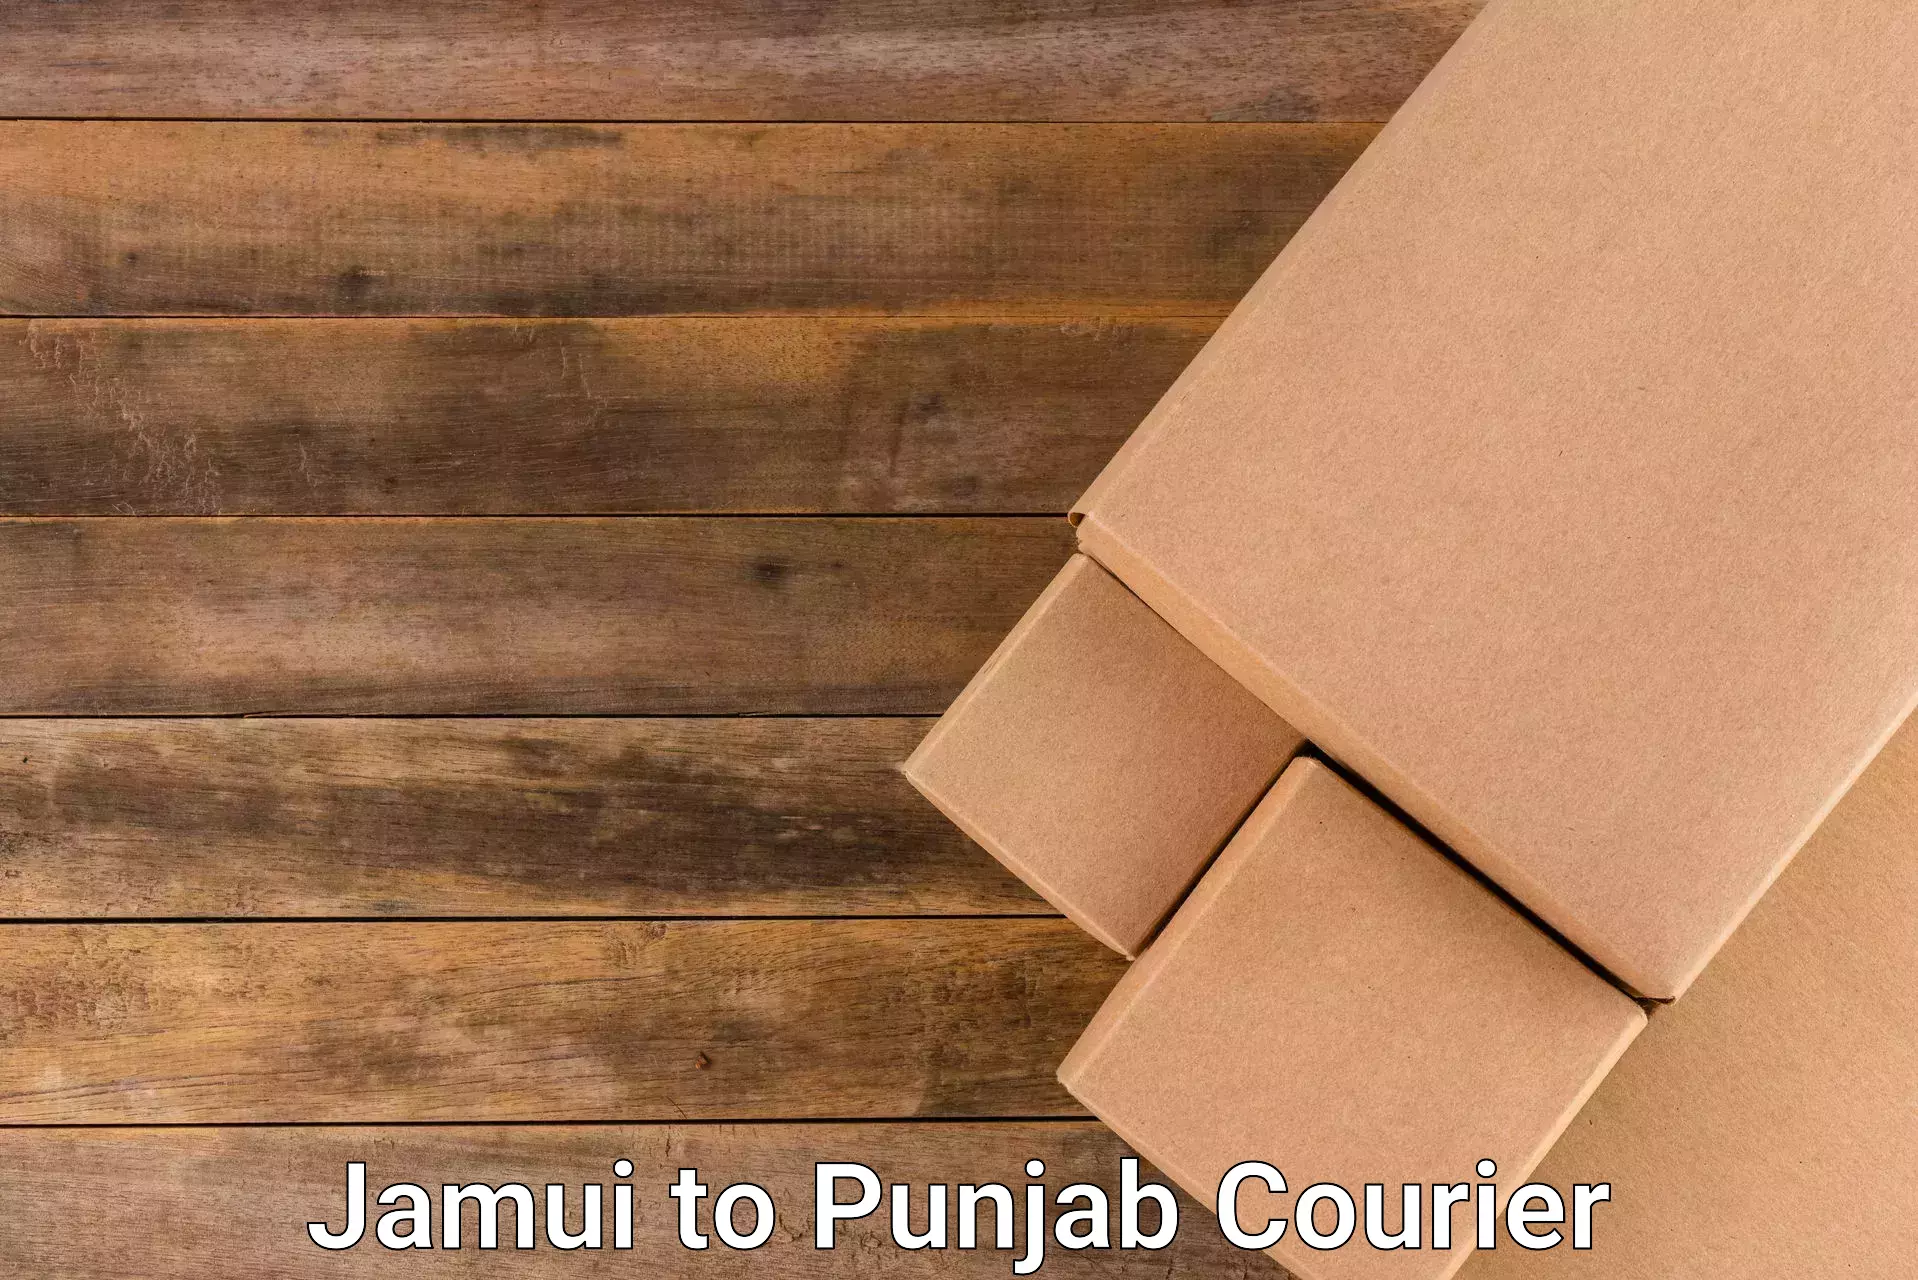 Courier service efficiency Jamui to Dinanagar